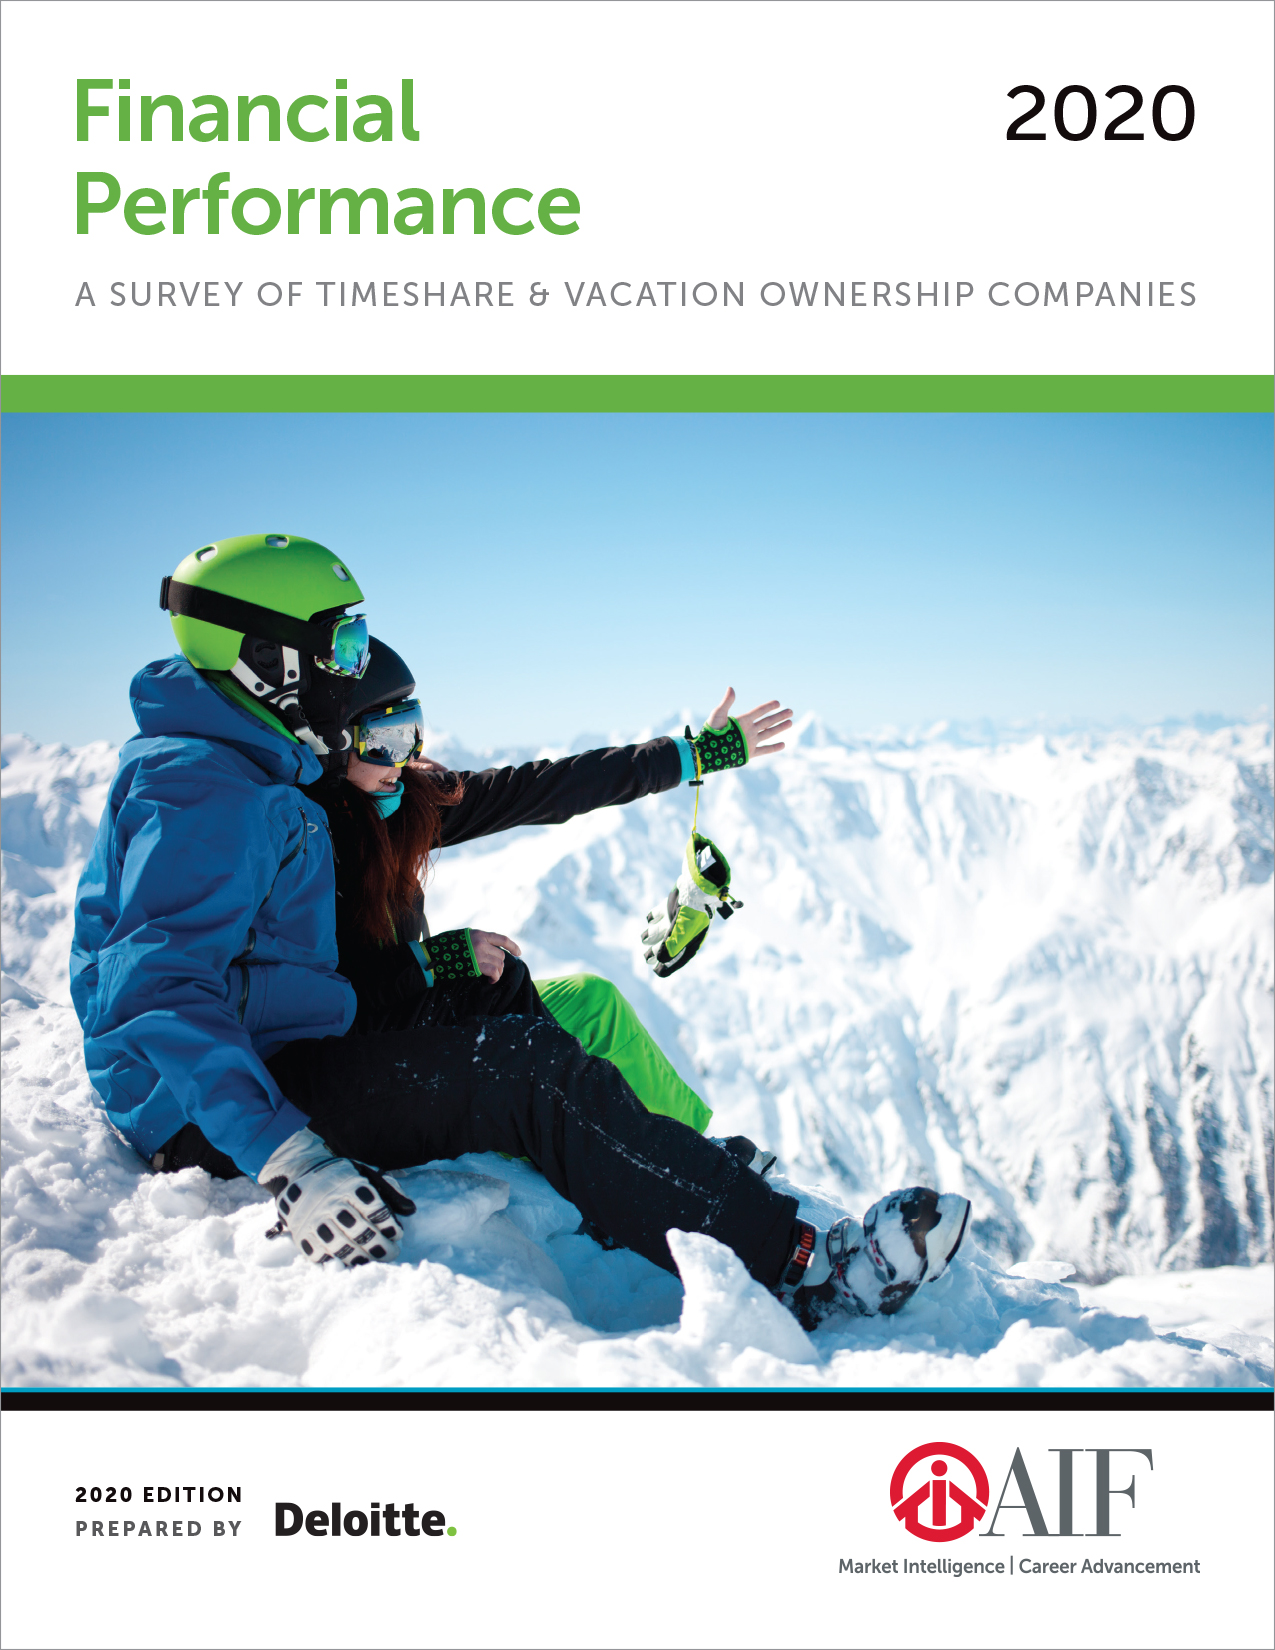 Financial Performance, 2020 Ed. Full Report